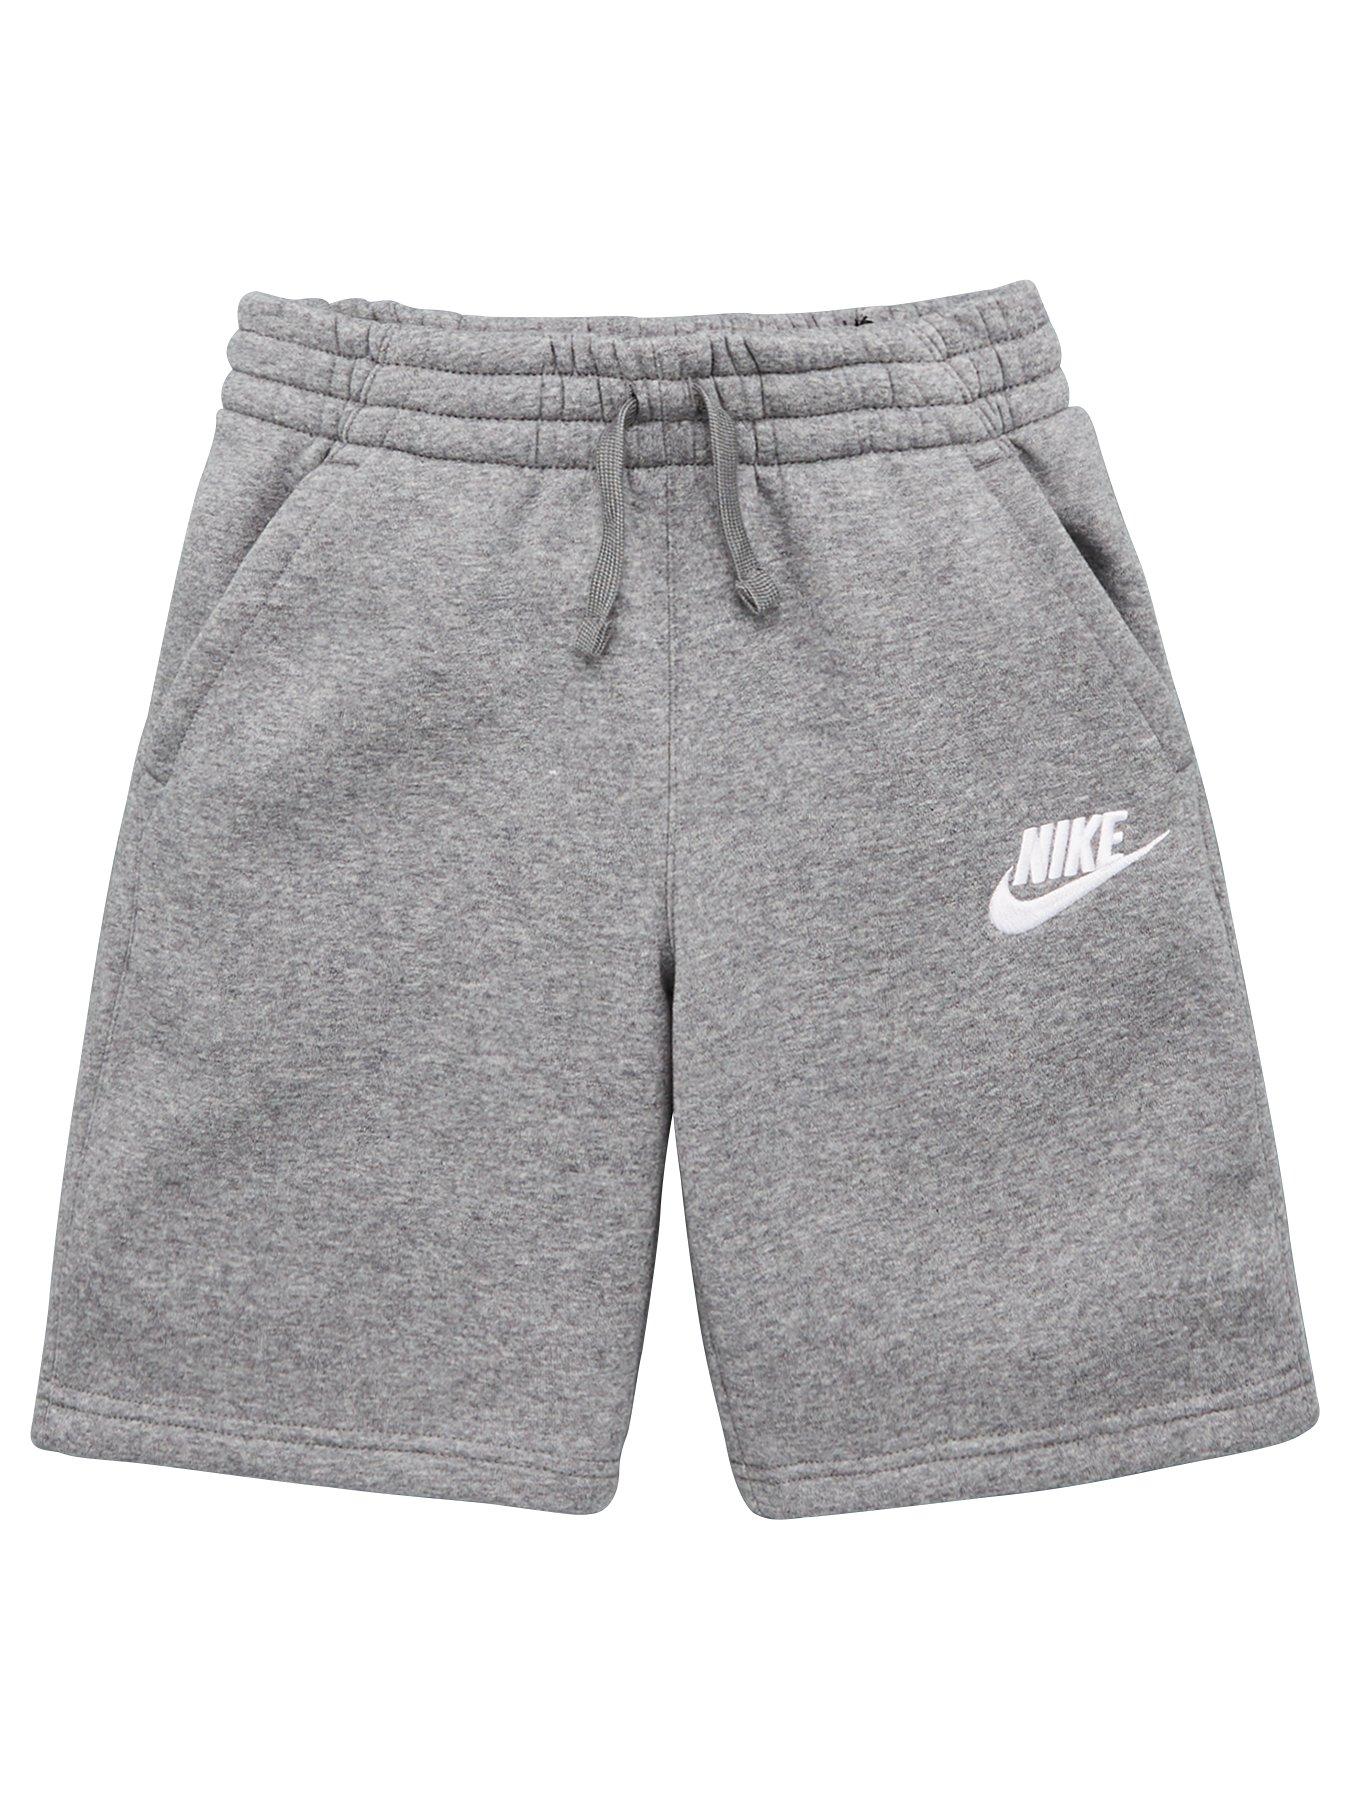 nike shorts boys grey